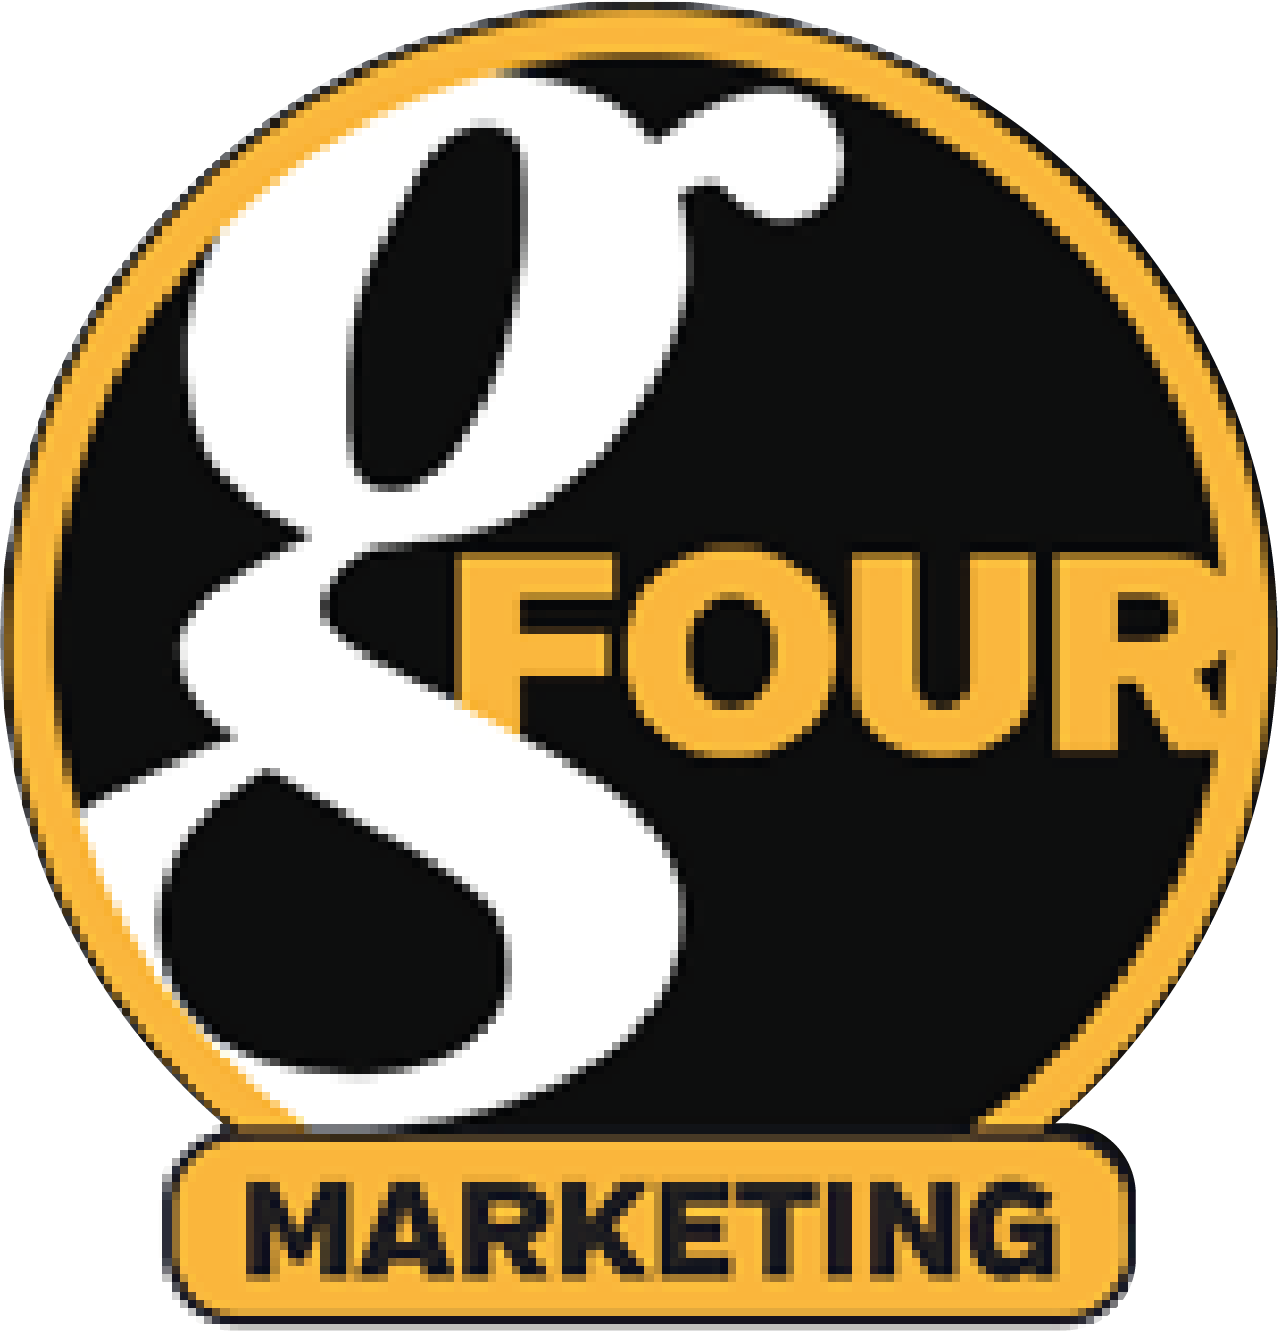 gfour marketing